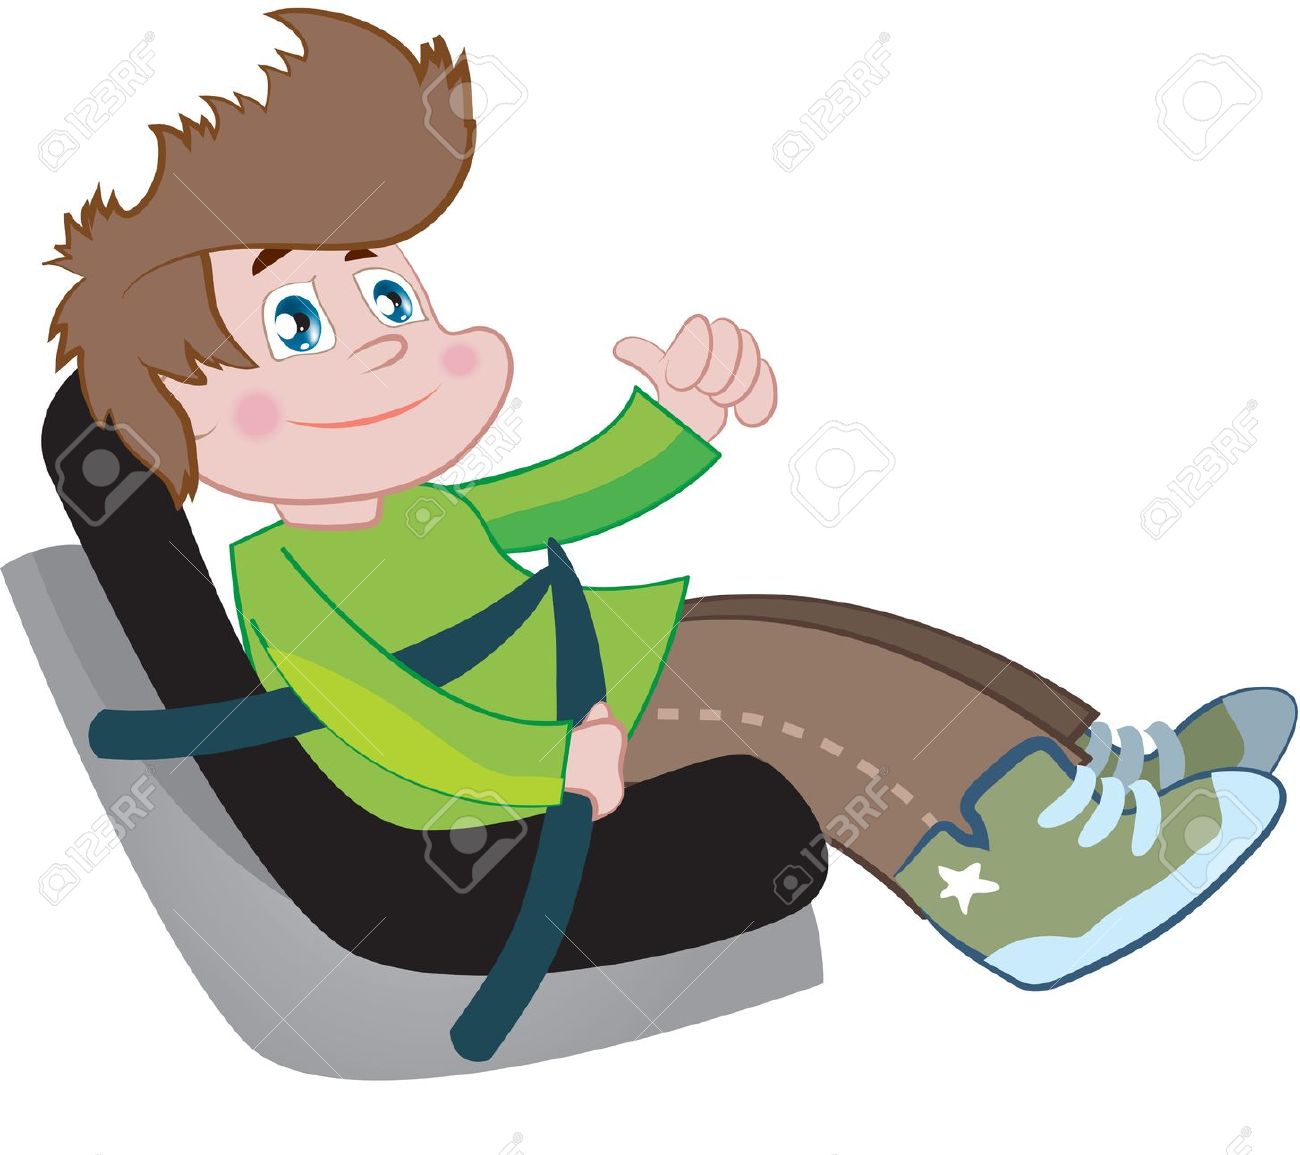 Child seats clipart - Clipground